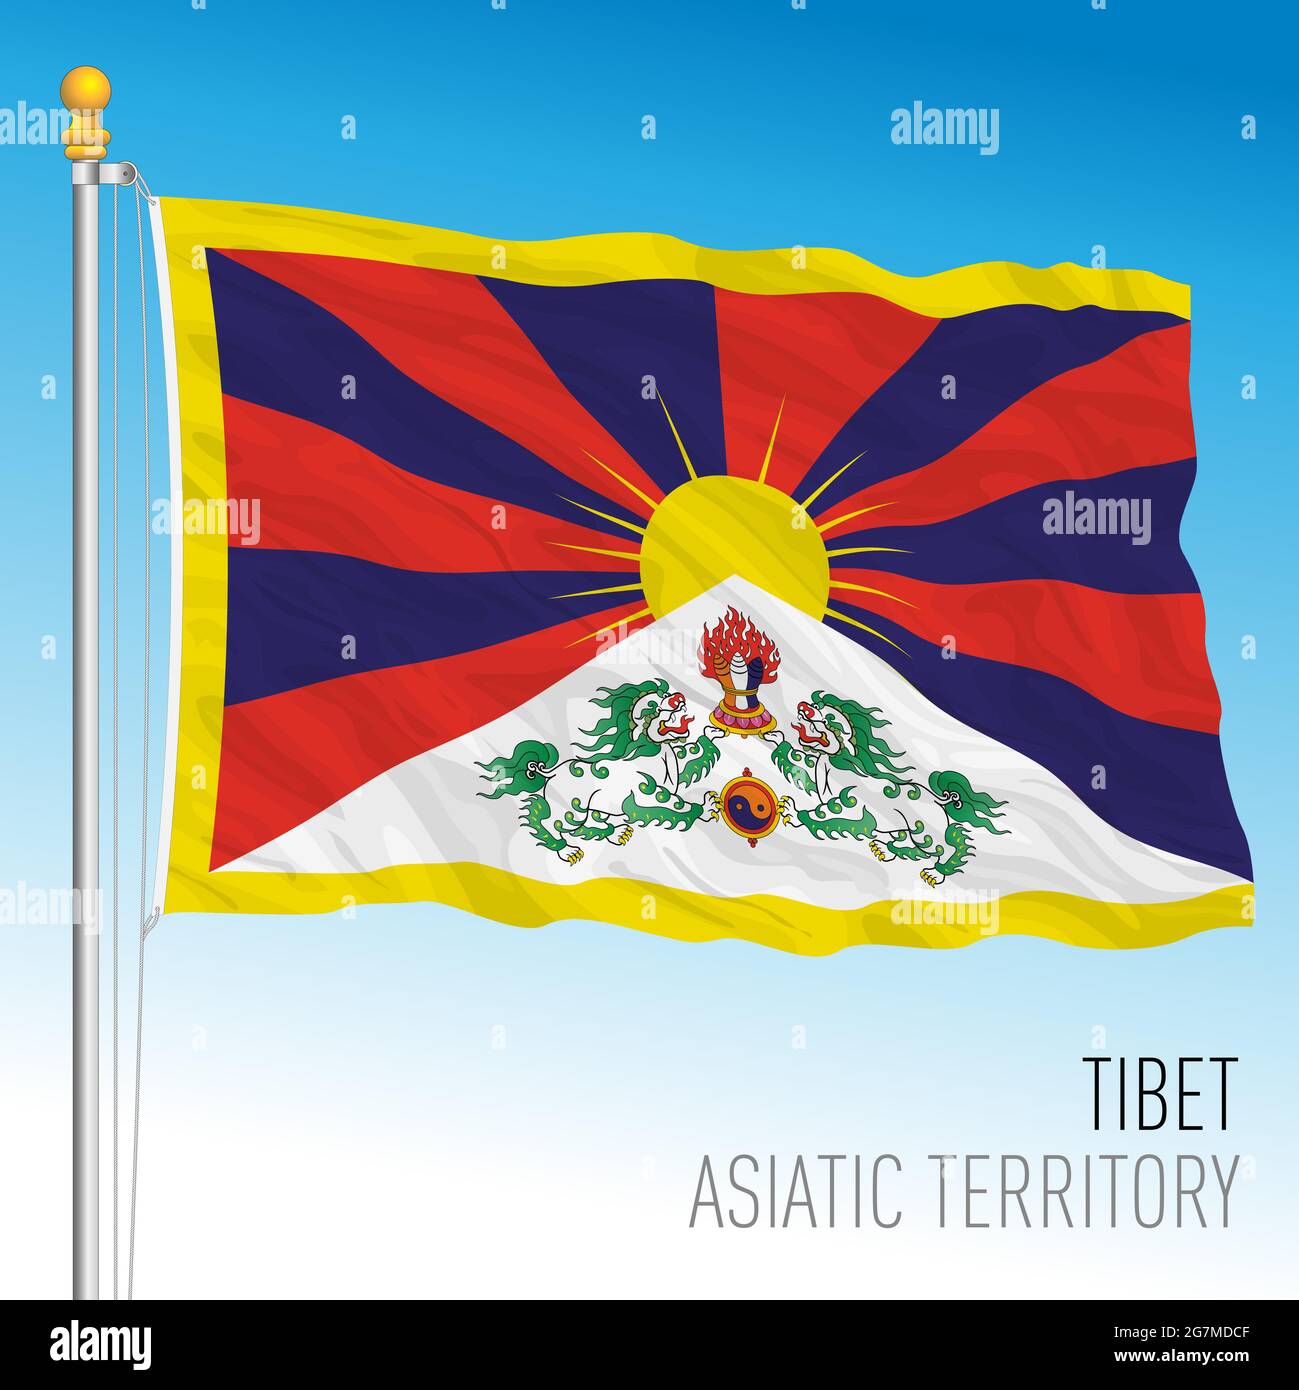 Tibet offizielle Nationalflagge, asiatisches Territorium, Vektorgrafik Stock Vektor